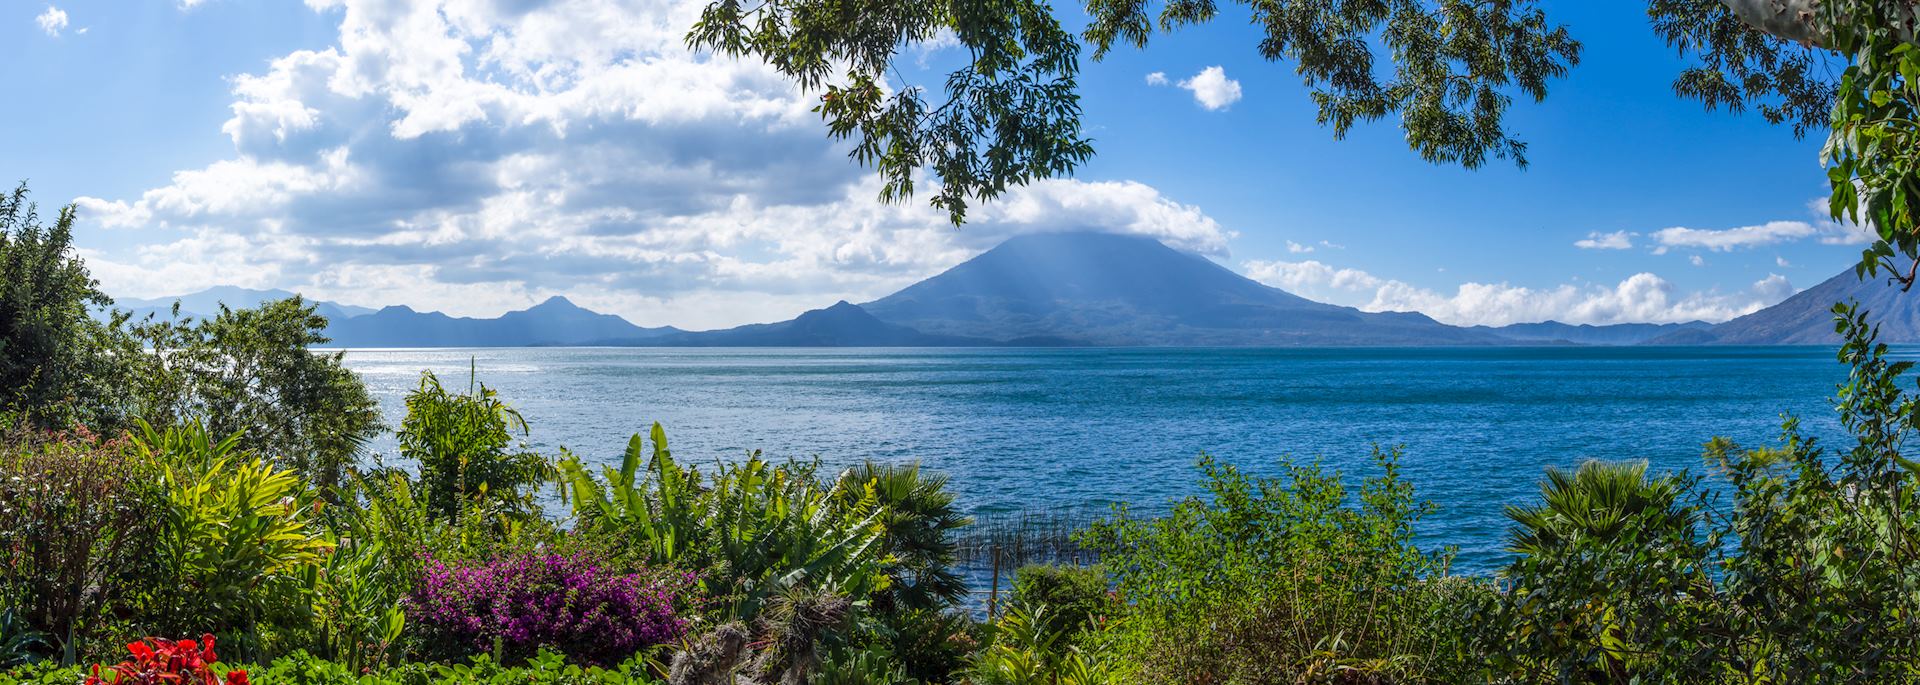 Lake Atitlán and Toliman Volcano